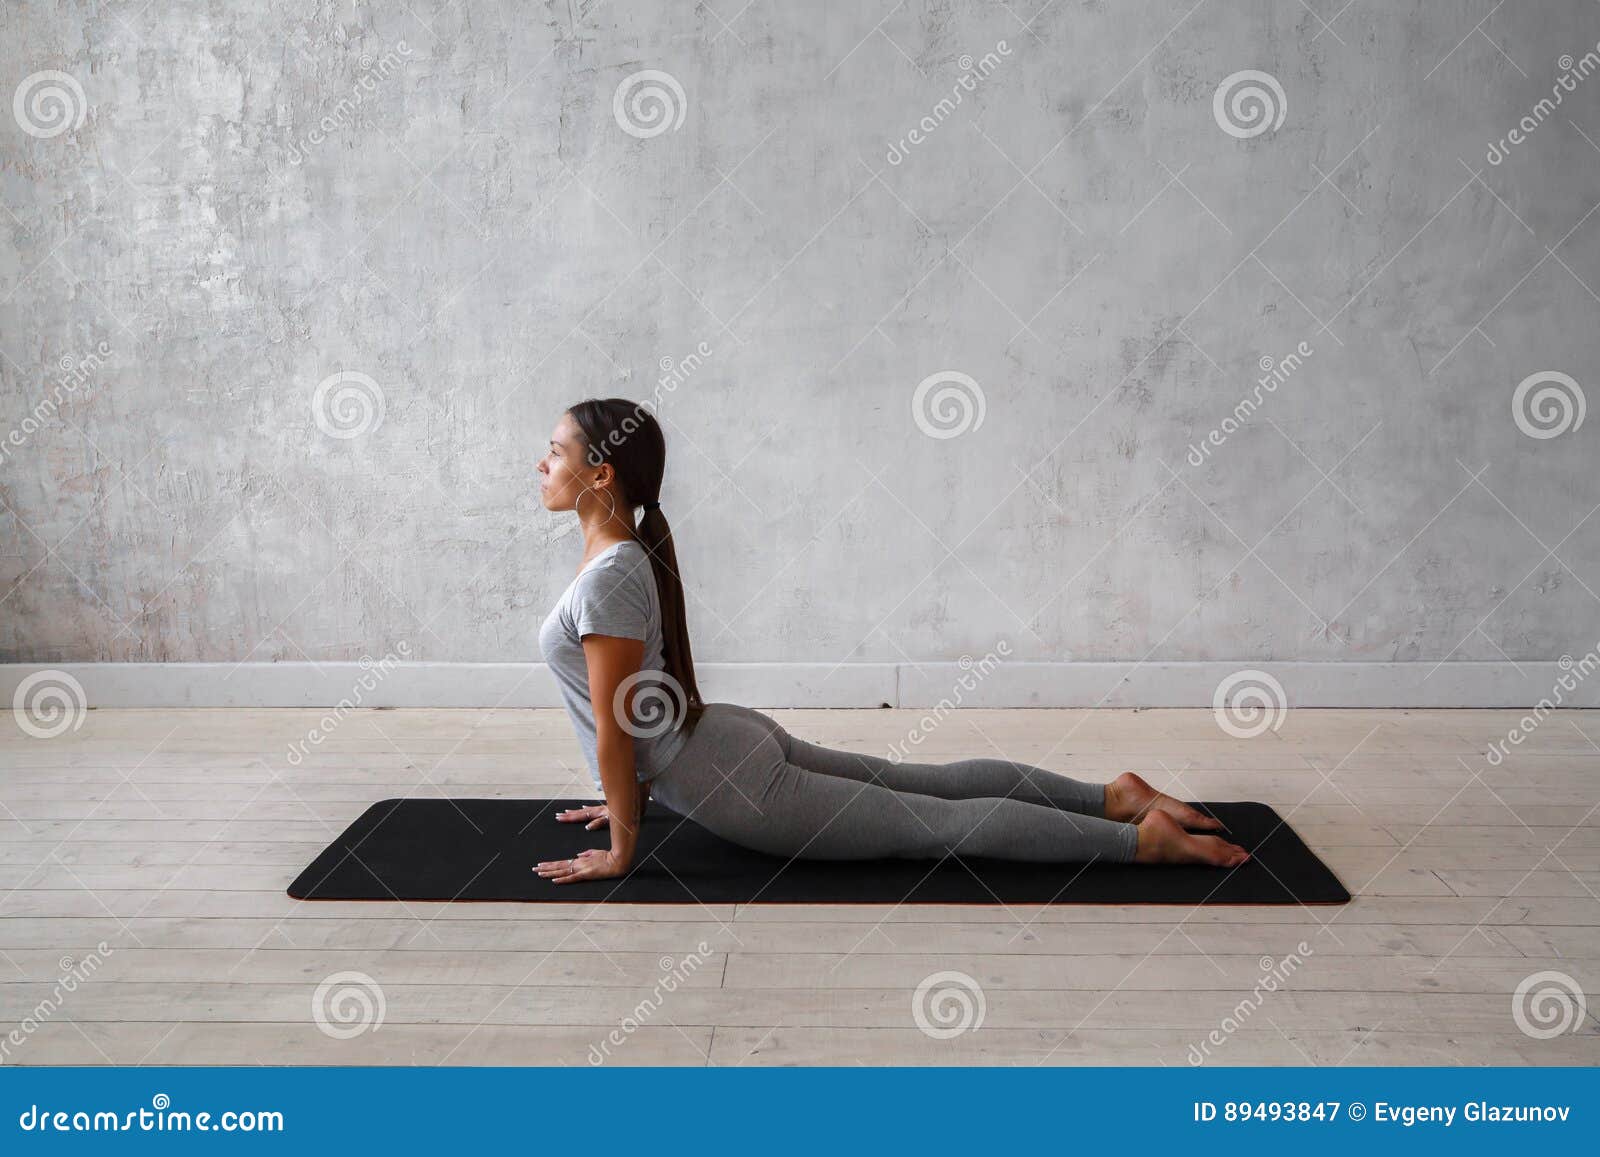 Young Woman Advanced Sitting Yoga Pose Stock Photo 146931311 | Shutterstock